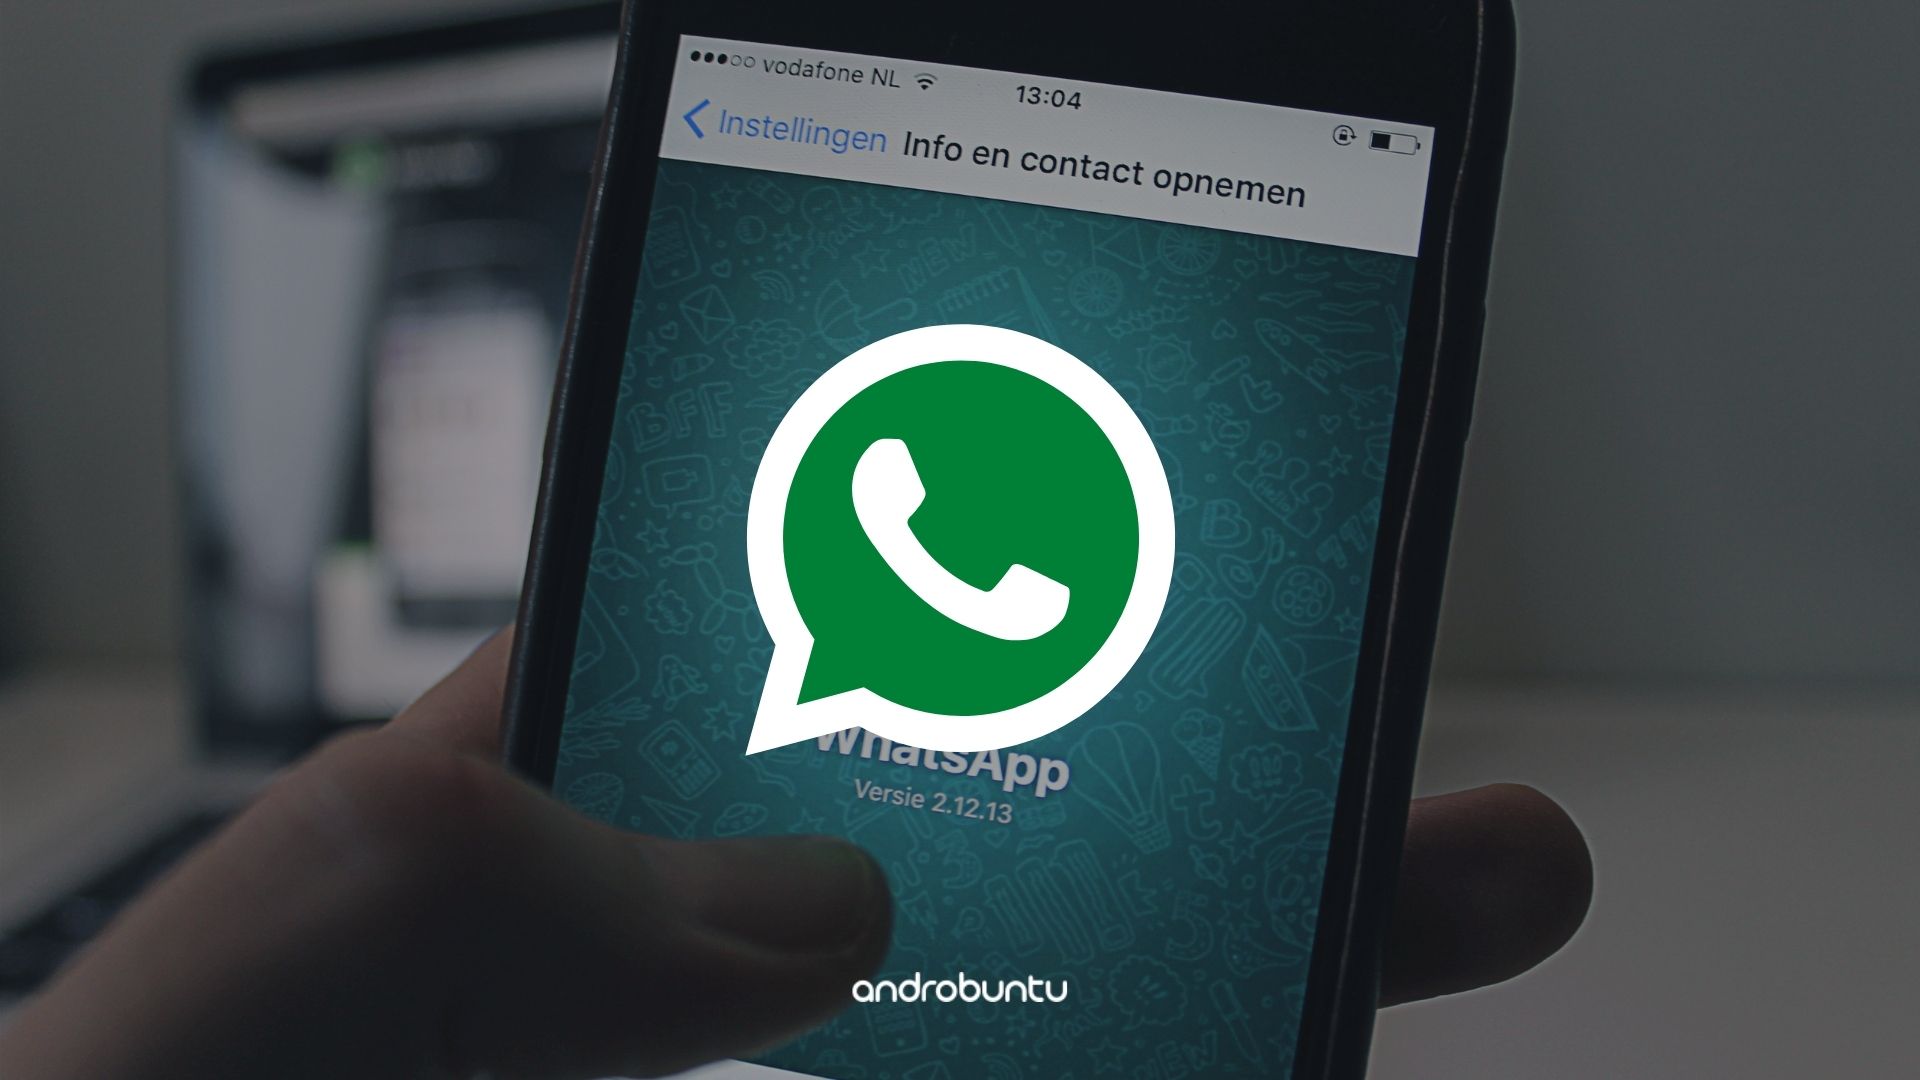 Cara Menonaktifkan WhatsApp Sementara by Androbuntu